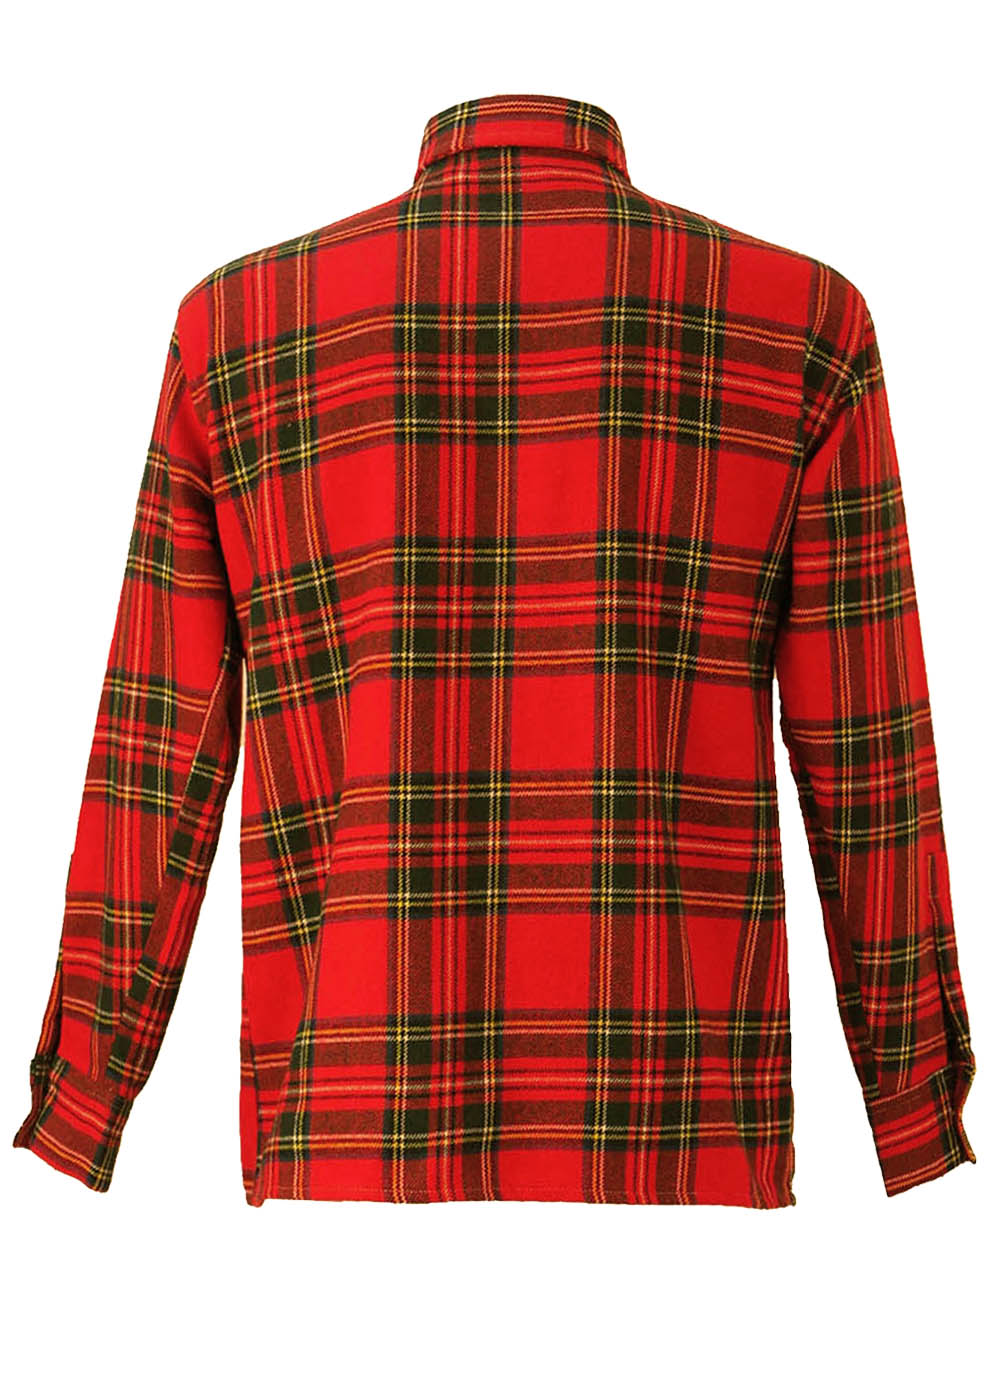 Classic Red Tartan Check Flannel Shirt - M/L | Reign Vintage